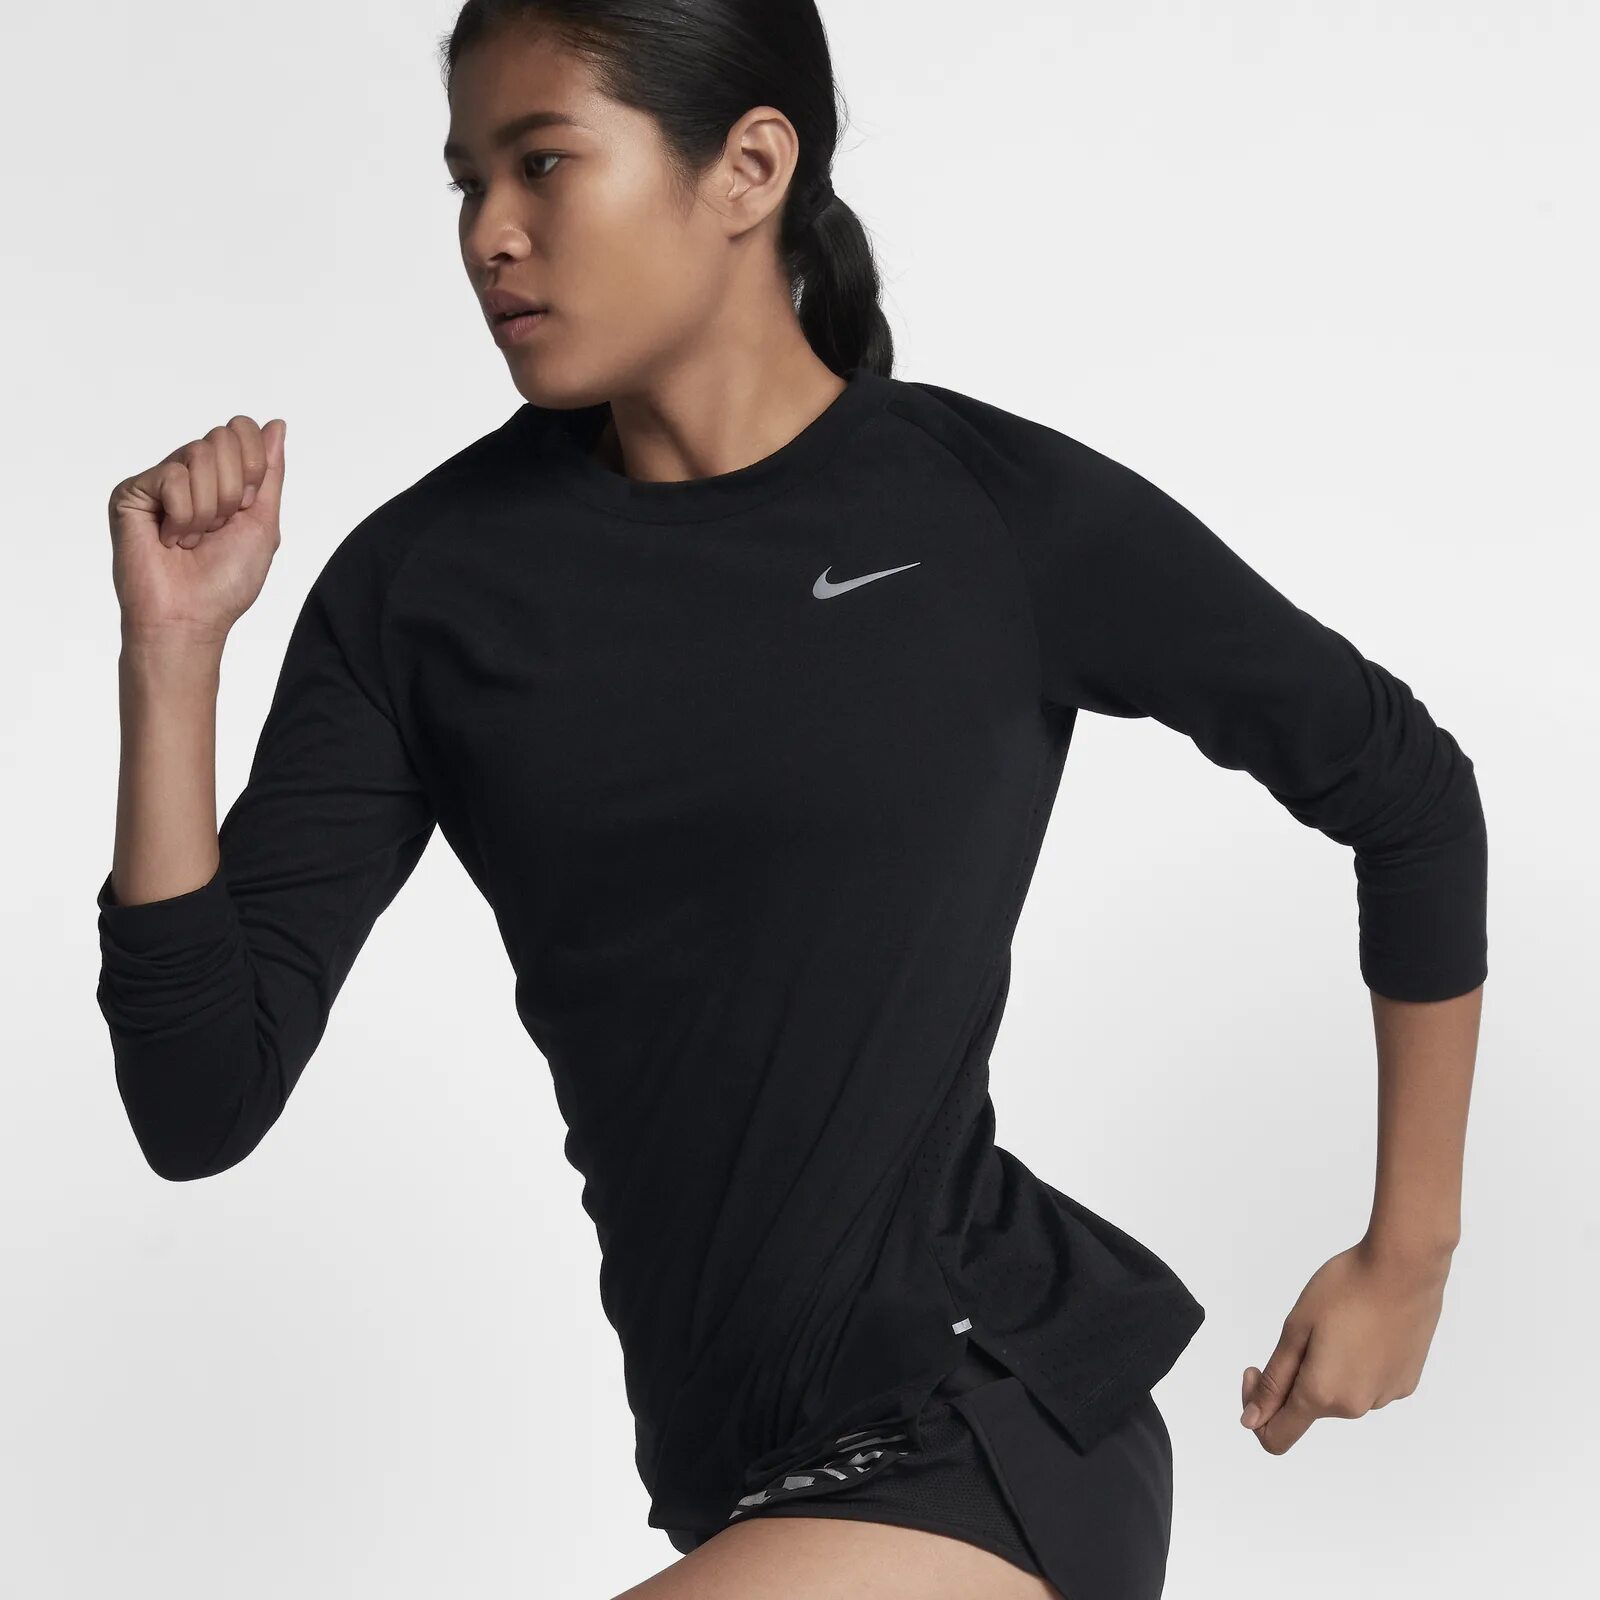 Лонгслив Nike Pro Dri-Fit. Nike Dri Fit лонгслив. Nike Dry Fit черная женская с длинным рукавом. Nike Dri Fit лонгслив женский для женщин 2016. Найк женщины